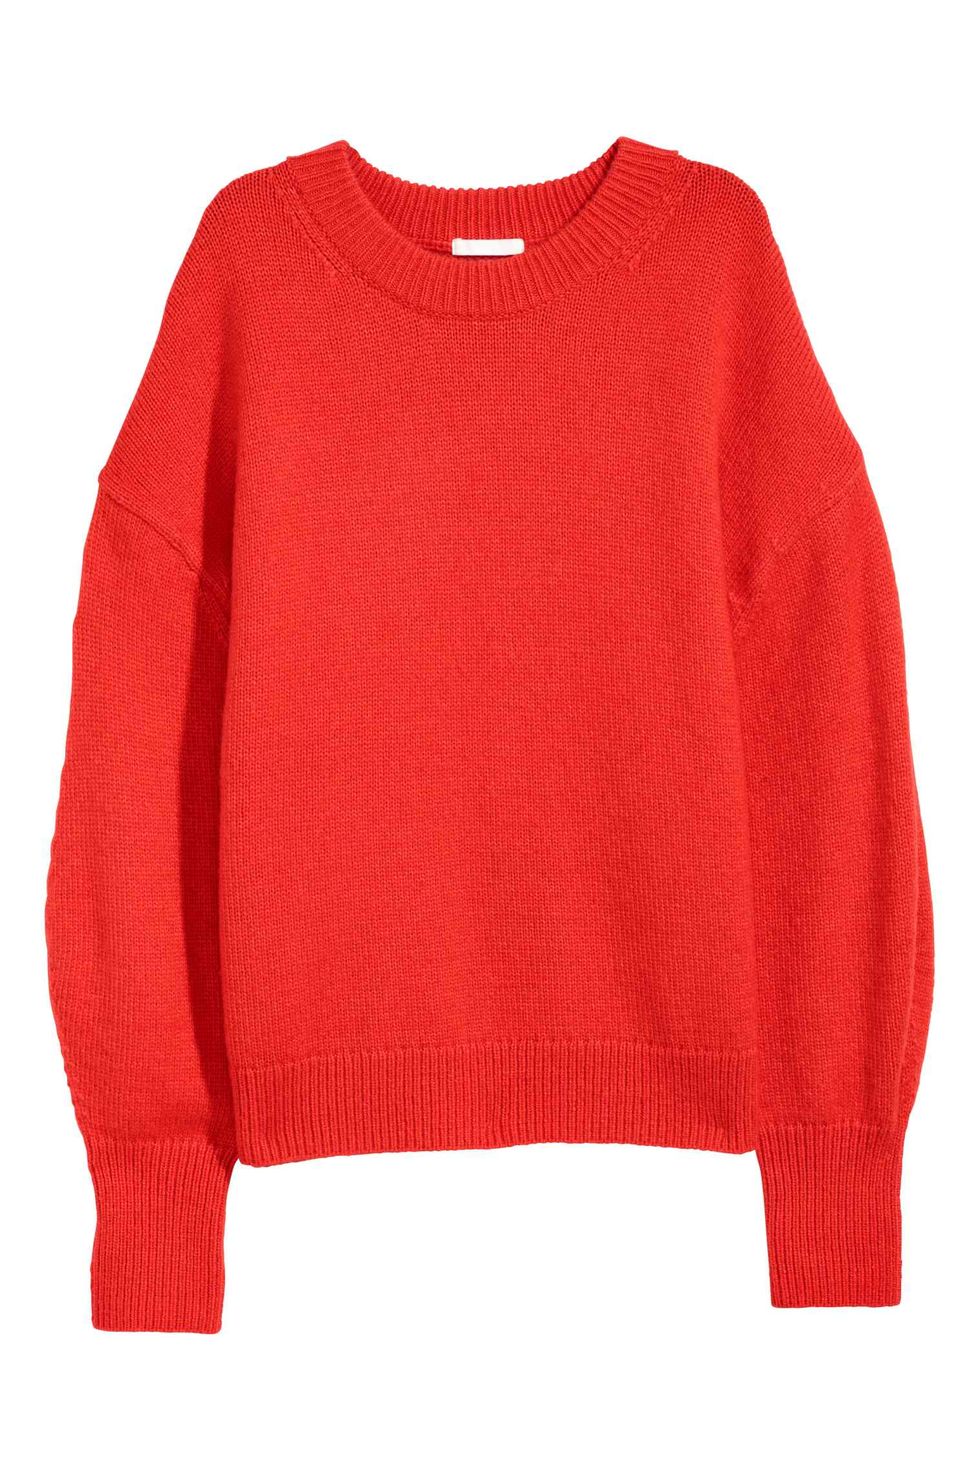 Clothing, Red, Sleeve, Sweater, Outerwear, Orange, Pink, Wool, Woolen, Top, 